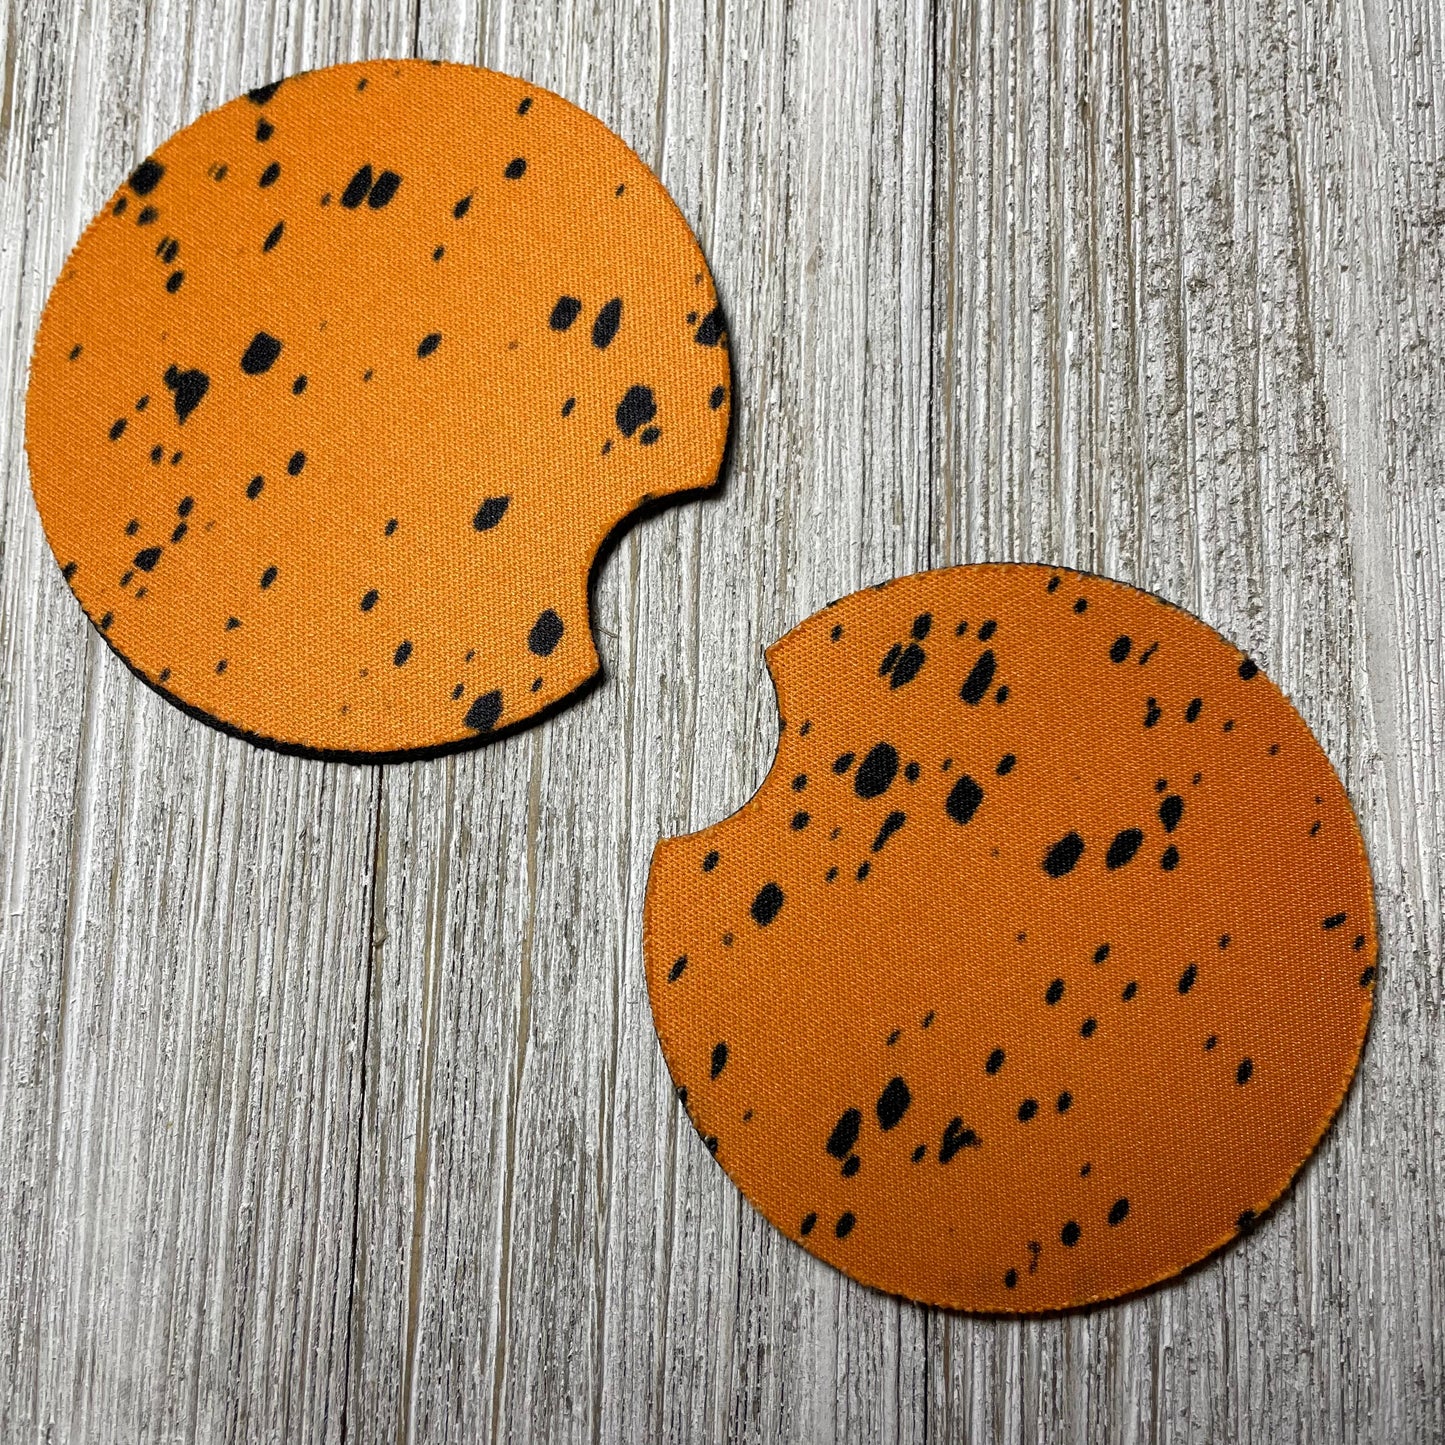 Orange with black dots Drink Coaster set of 2